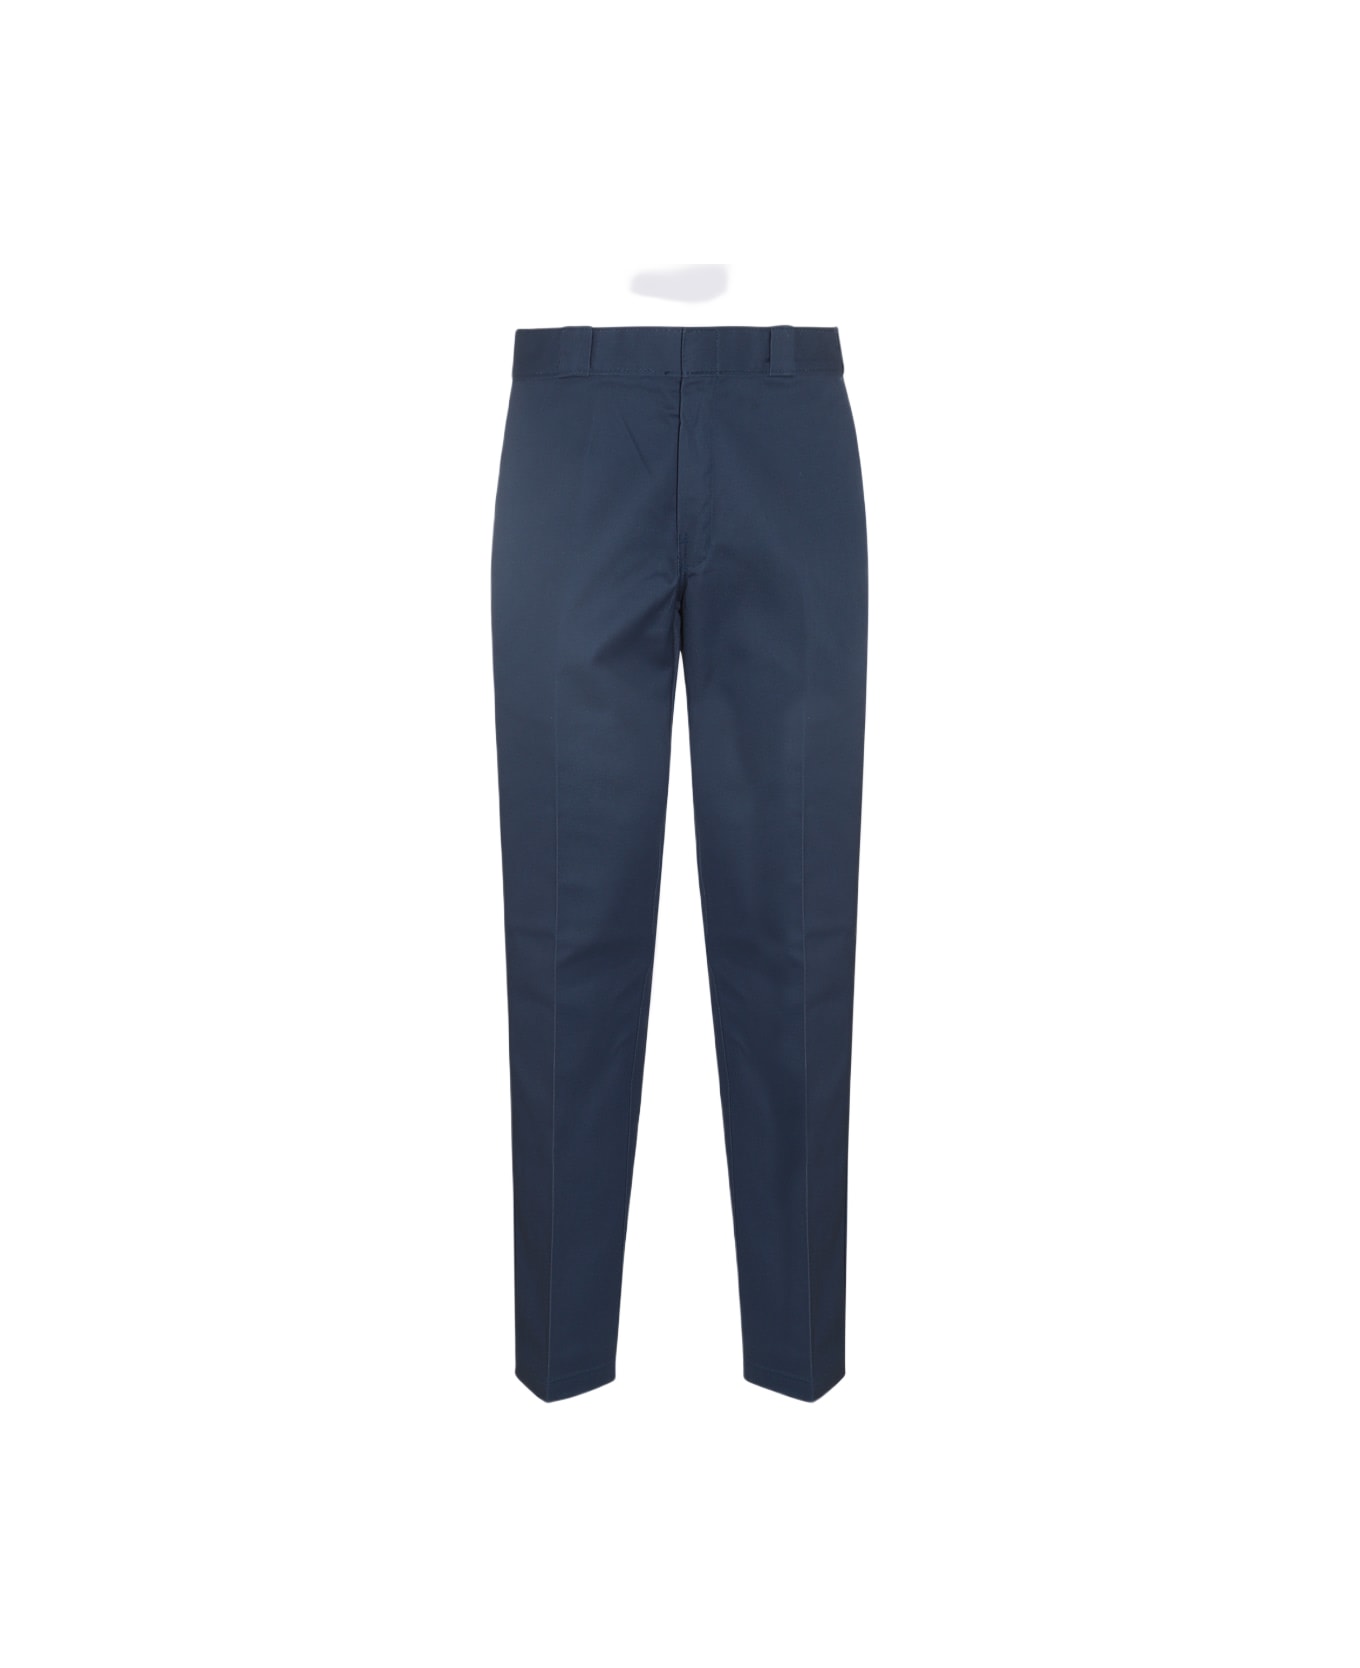 Dickies Air Force Blue Cotton Blend Pants